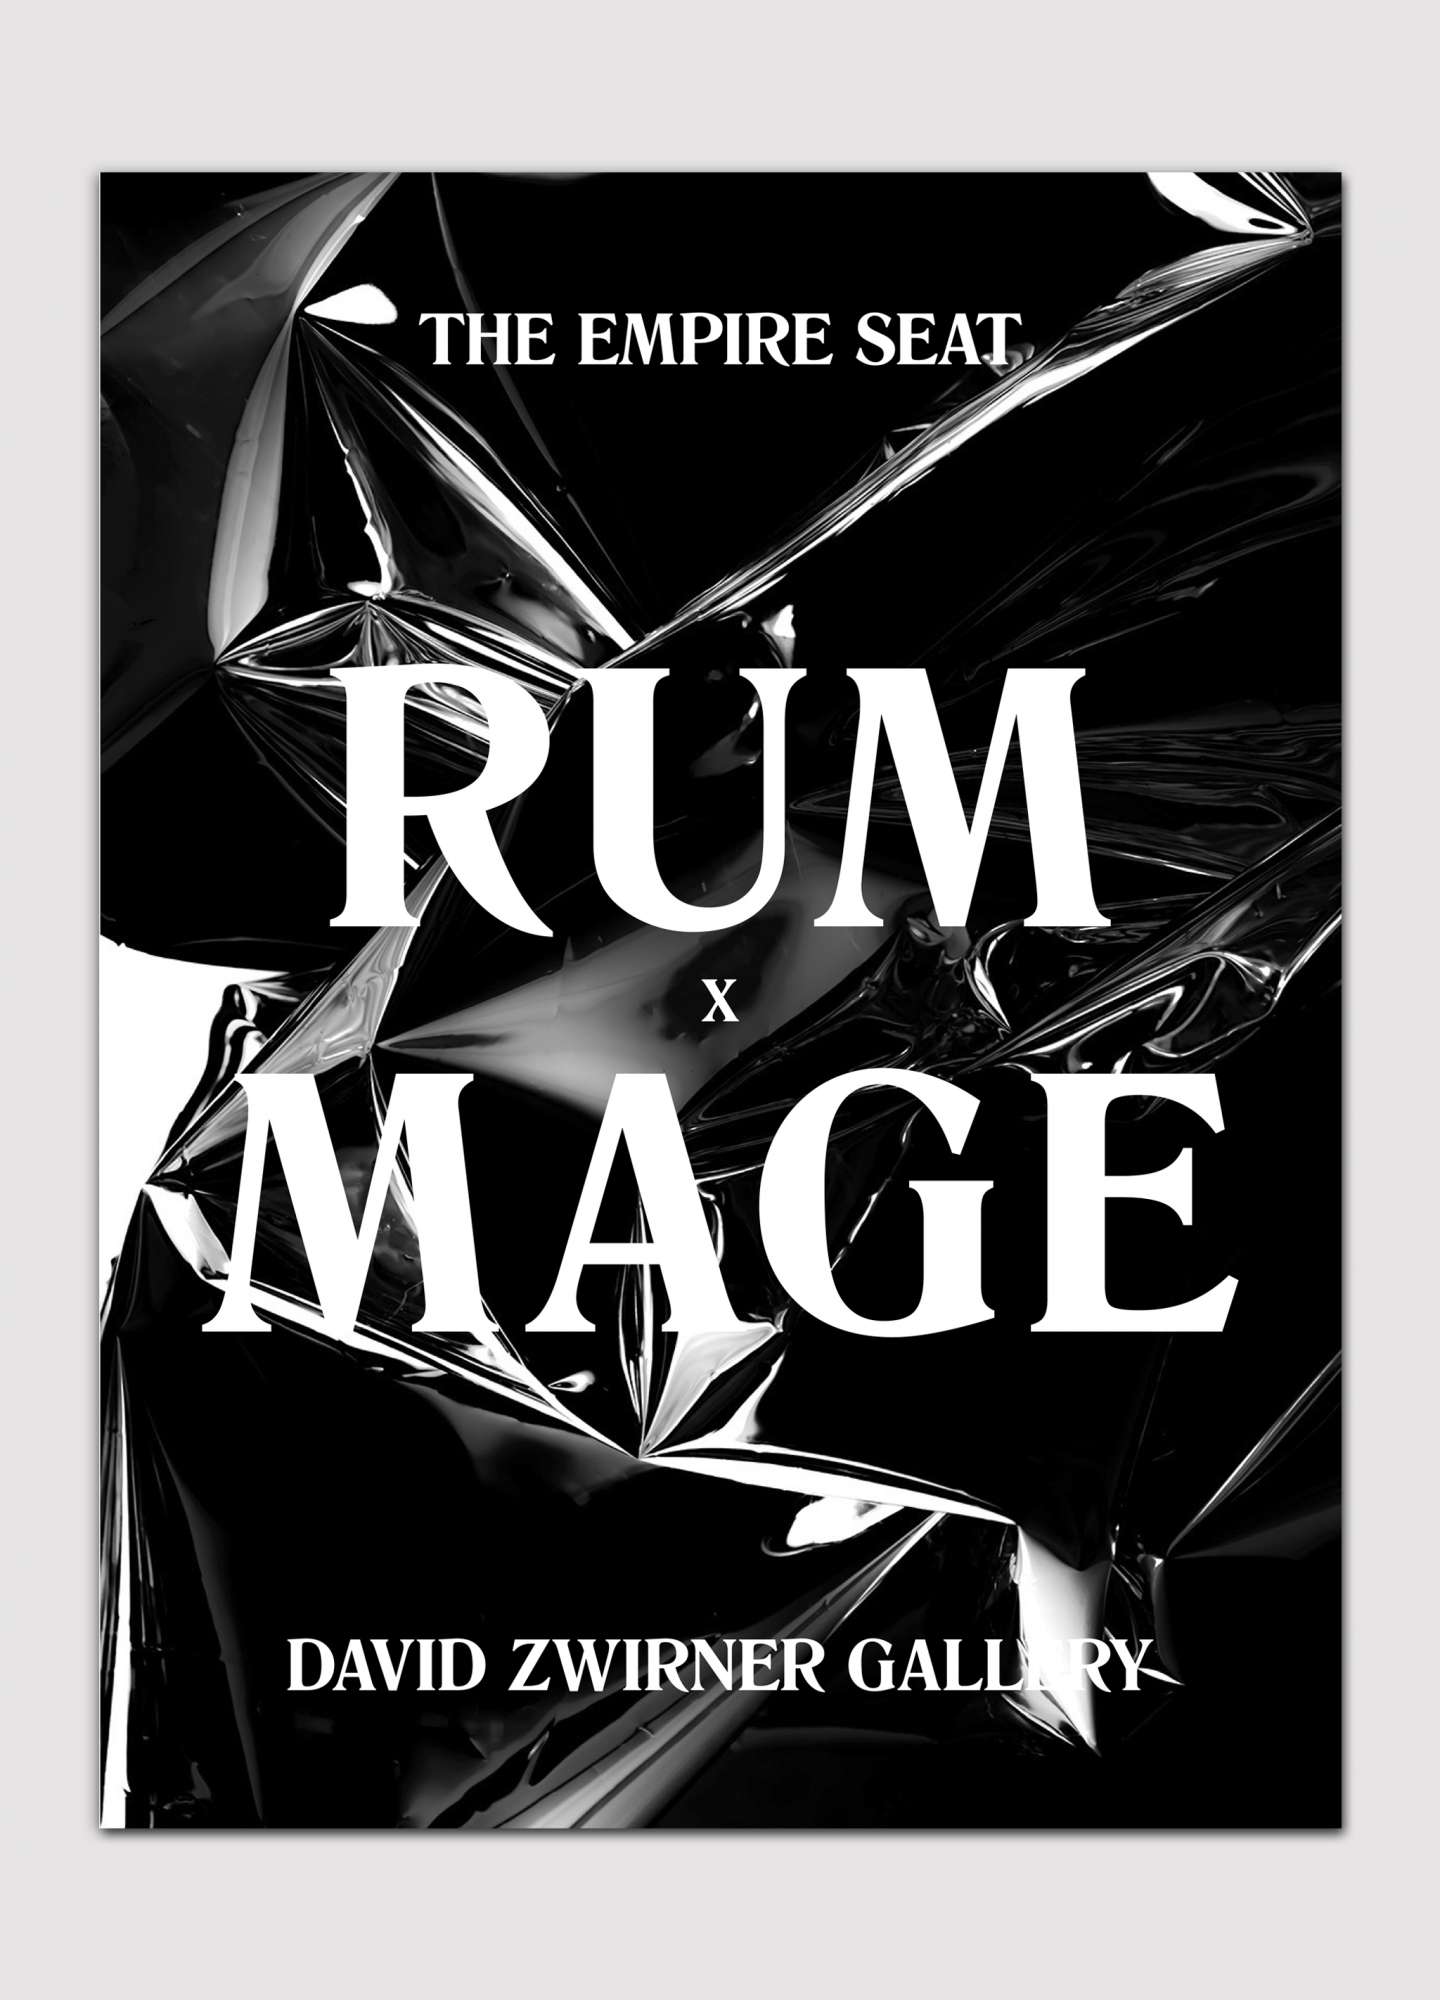 The Empire Seat x David Zwirner Gallery